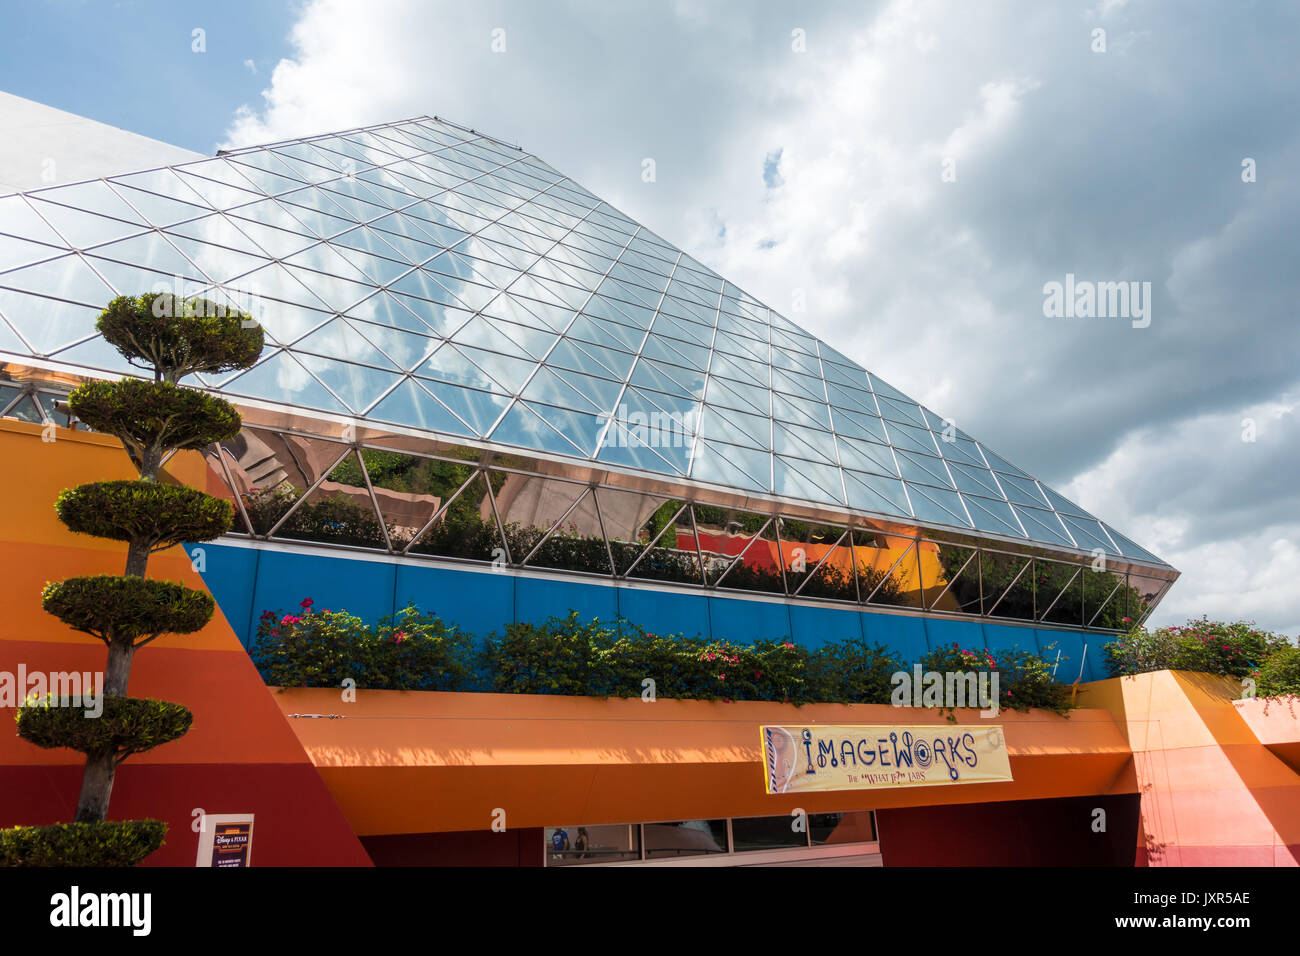 The Imagination Pavilion in Epcot, Walt Disney World, Orlando, Florida. Stock Photo